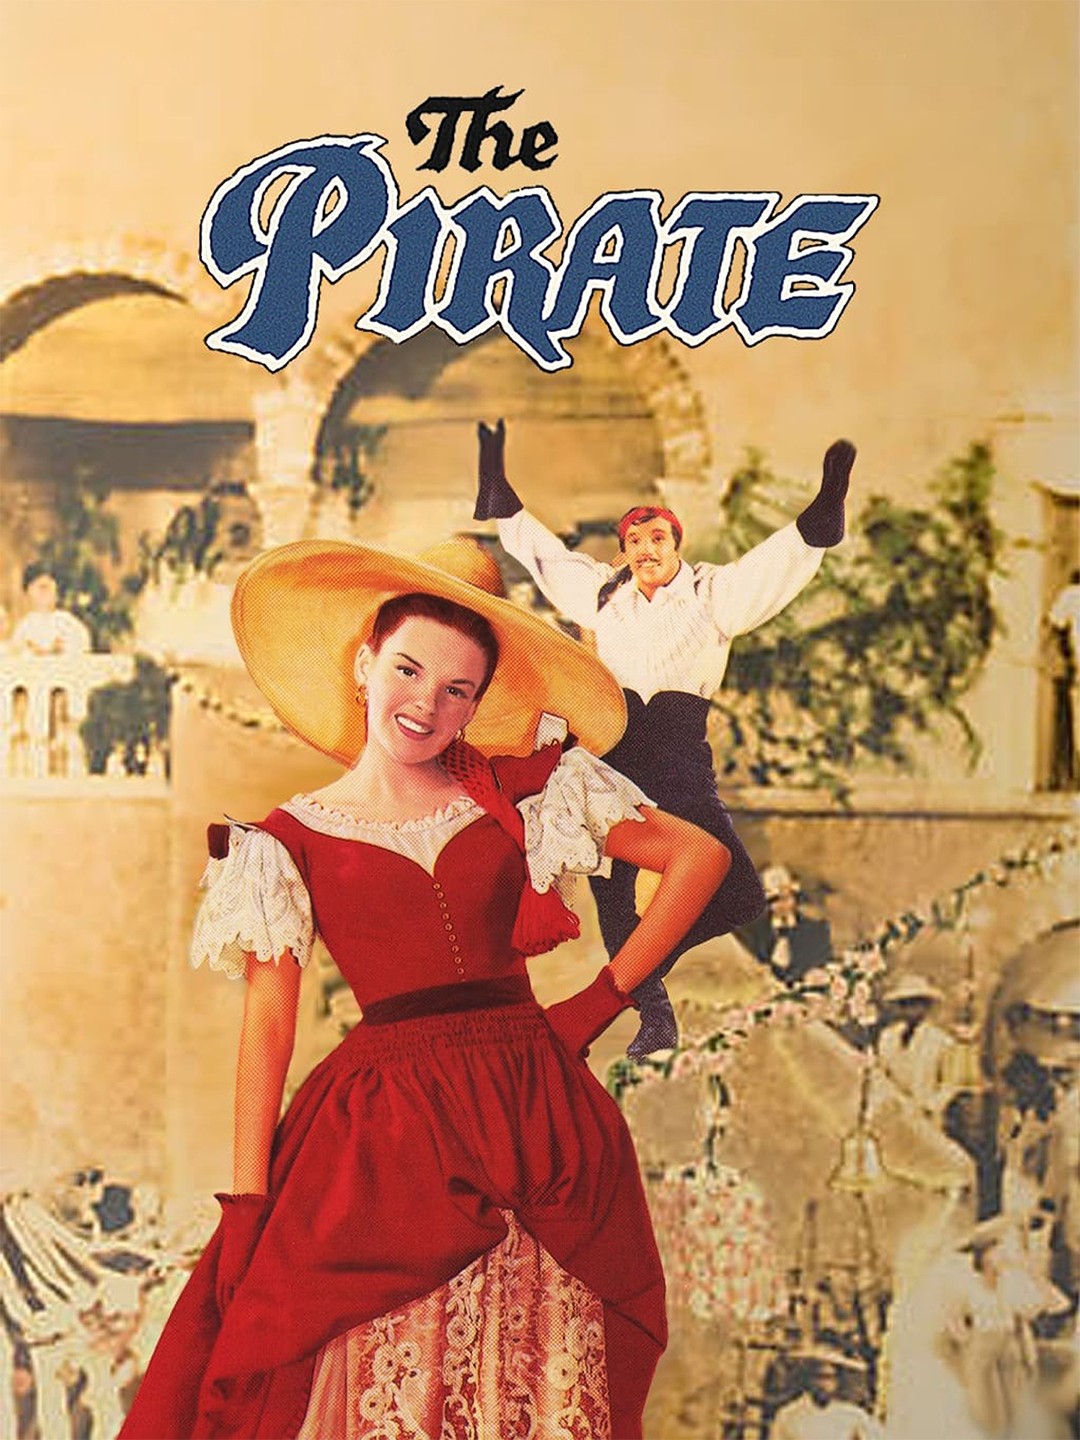 The Pirate (1948 film) - Wikipedia